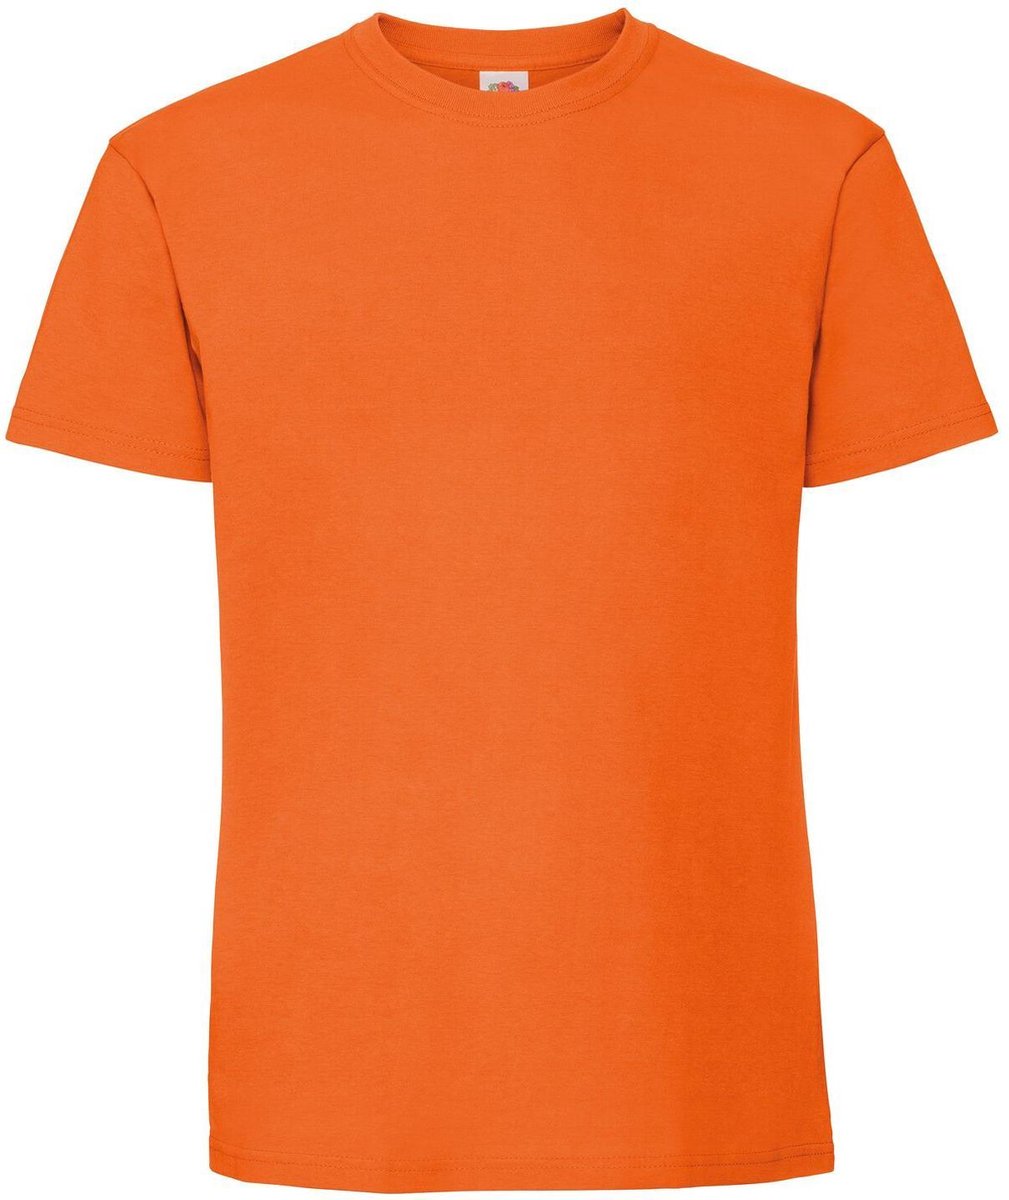 Fruit Of The Loom Mens Ringgesponnen Premium Tshirt (Oranje)